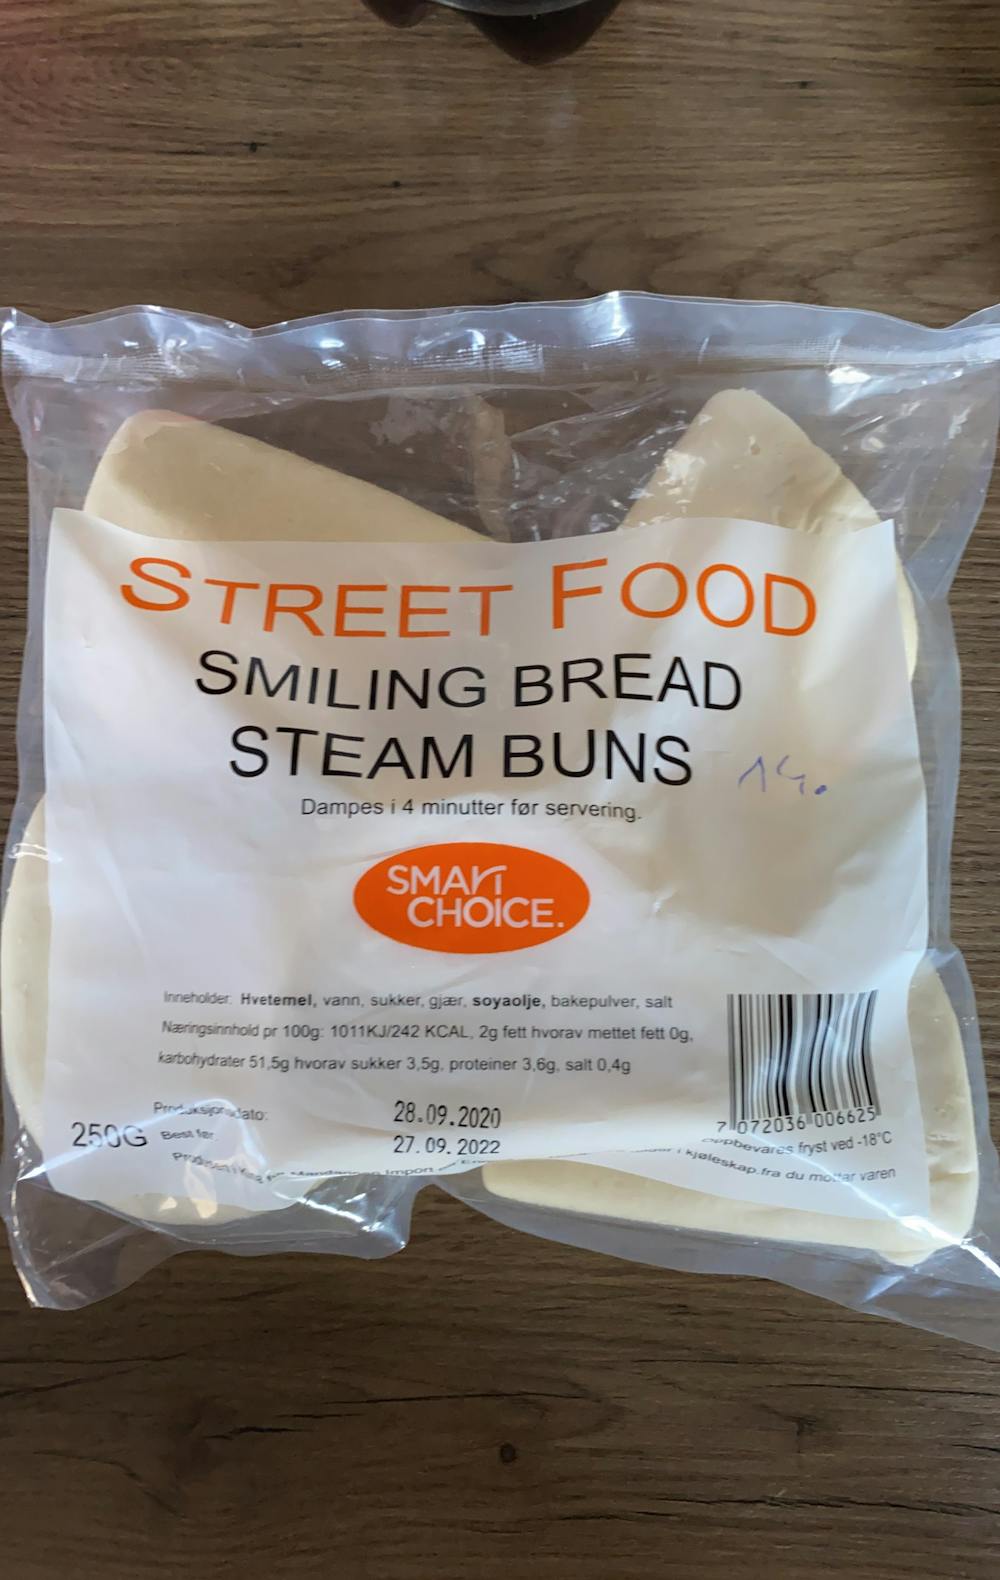 Street food, smiling bread steam buns, Smart choice